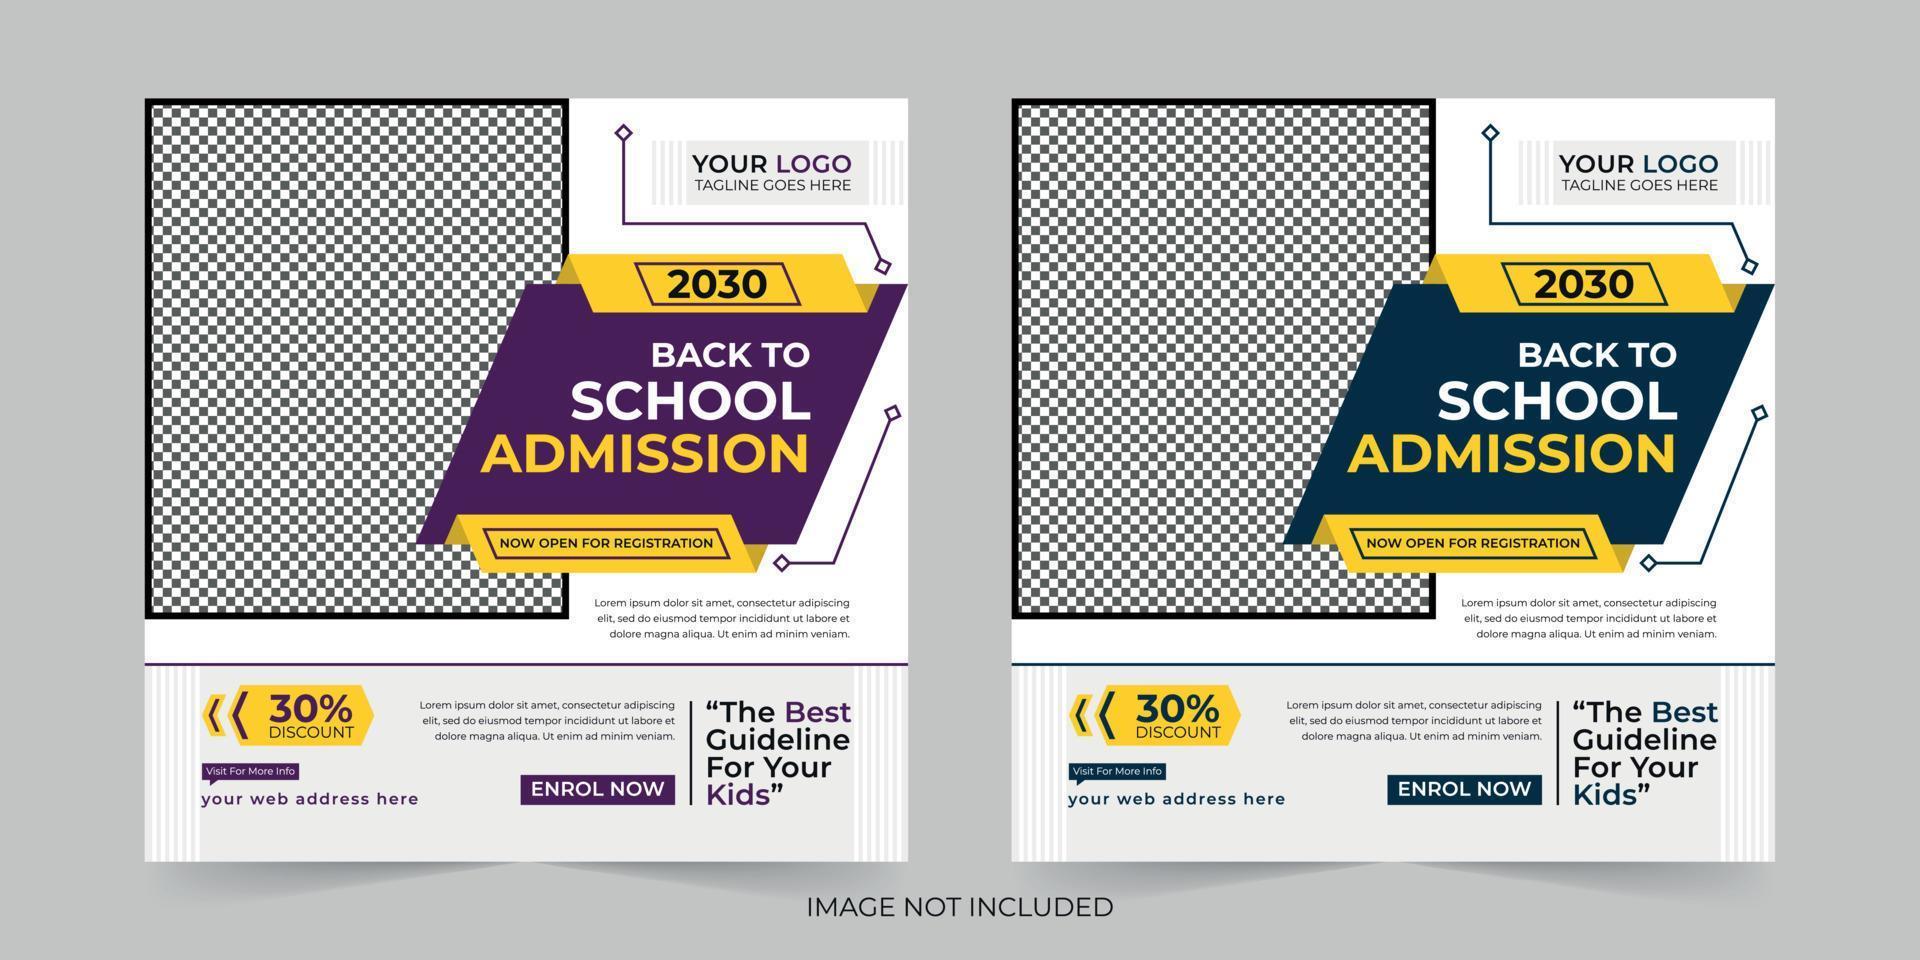 School admission digital marketing social media post, web banner promotion ads sales and discount banner vector template Design.